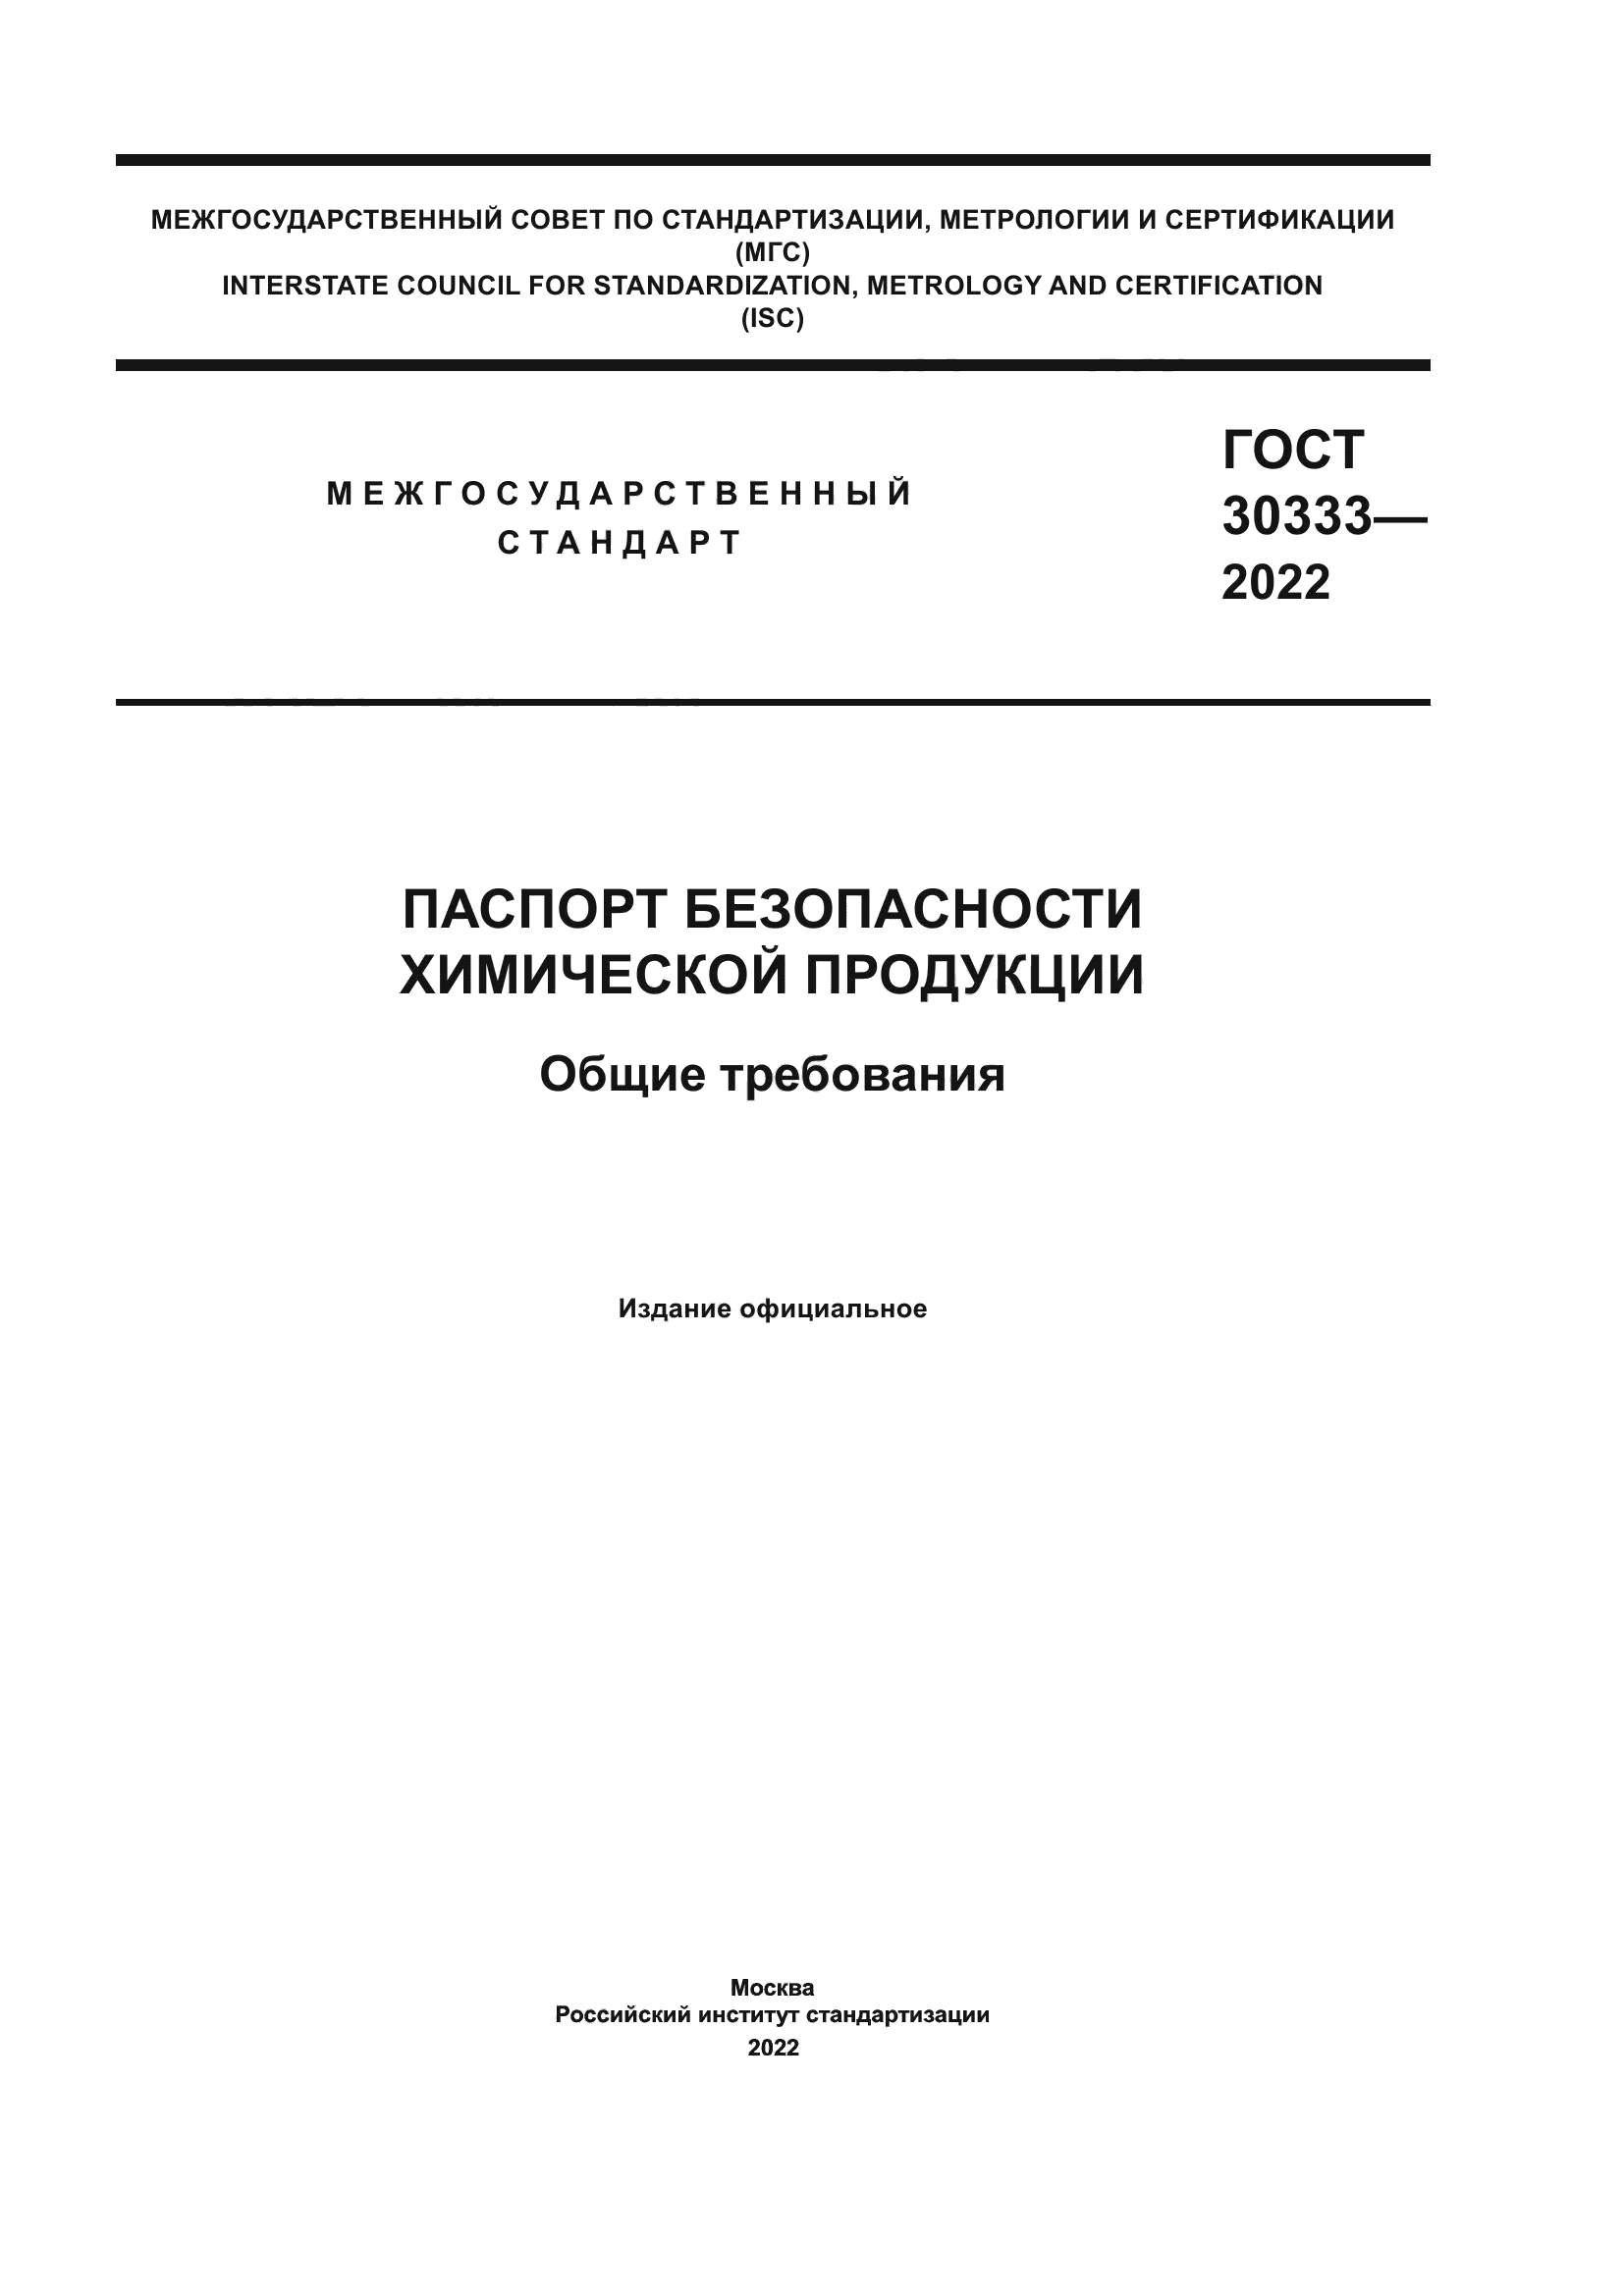 ГОСТ 30333-2022